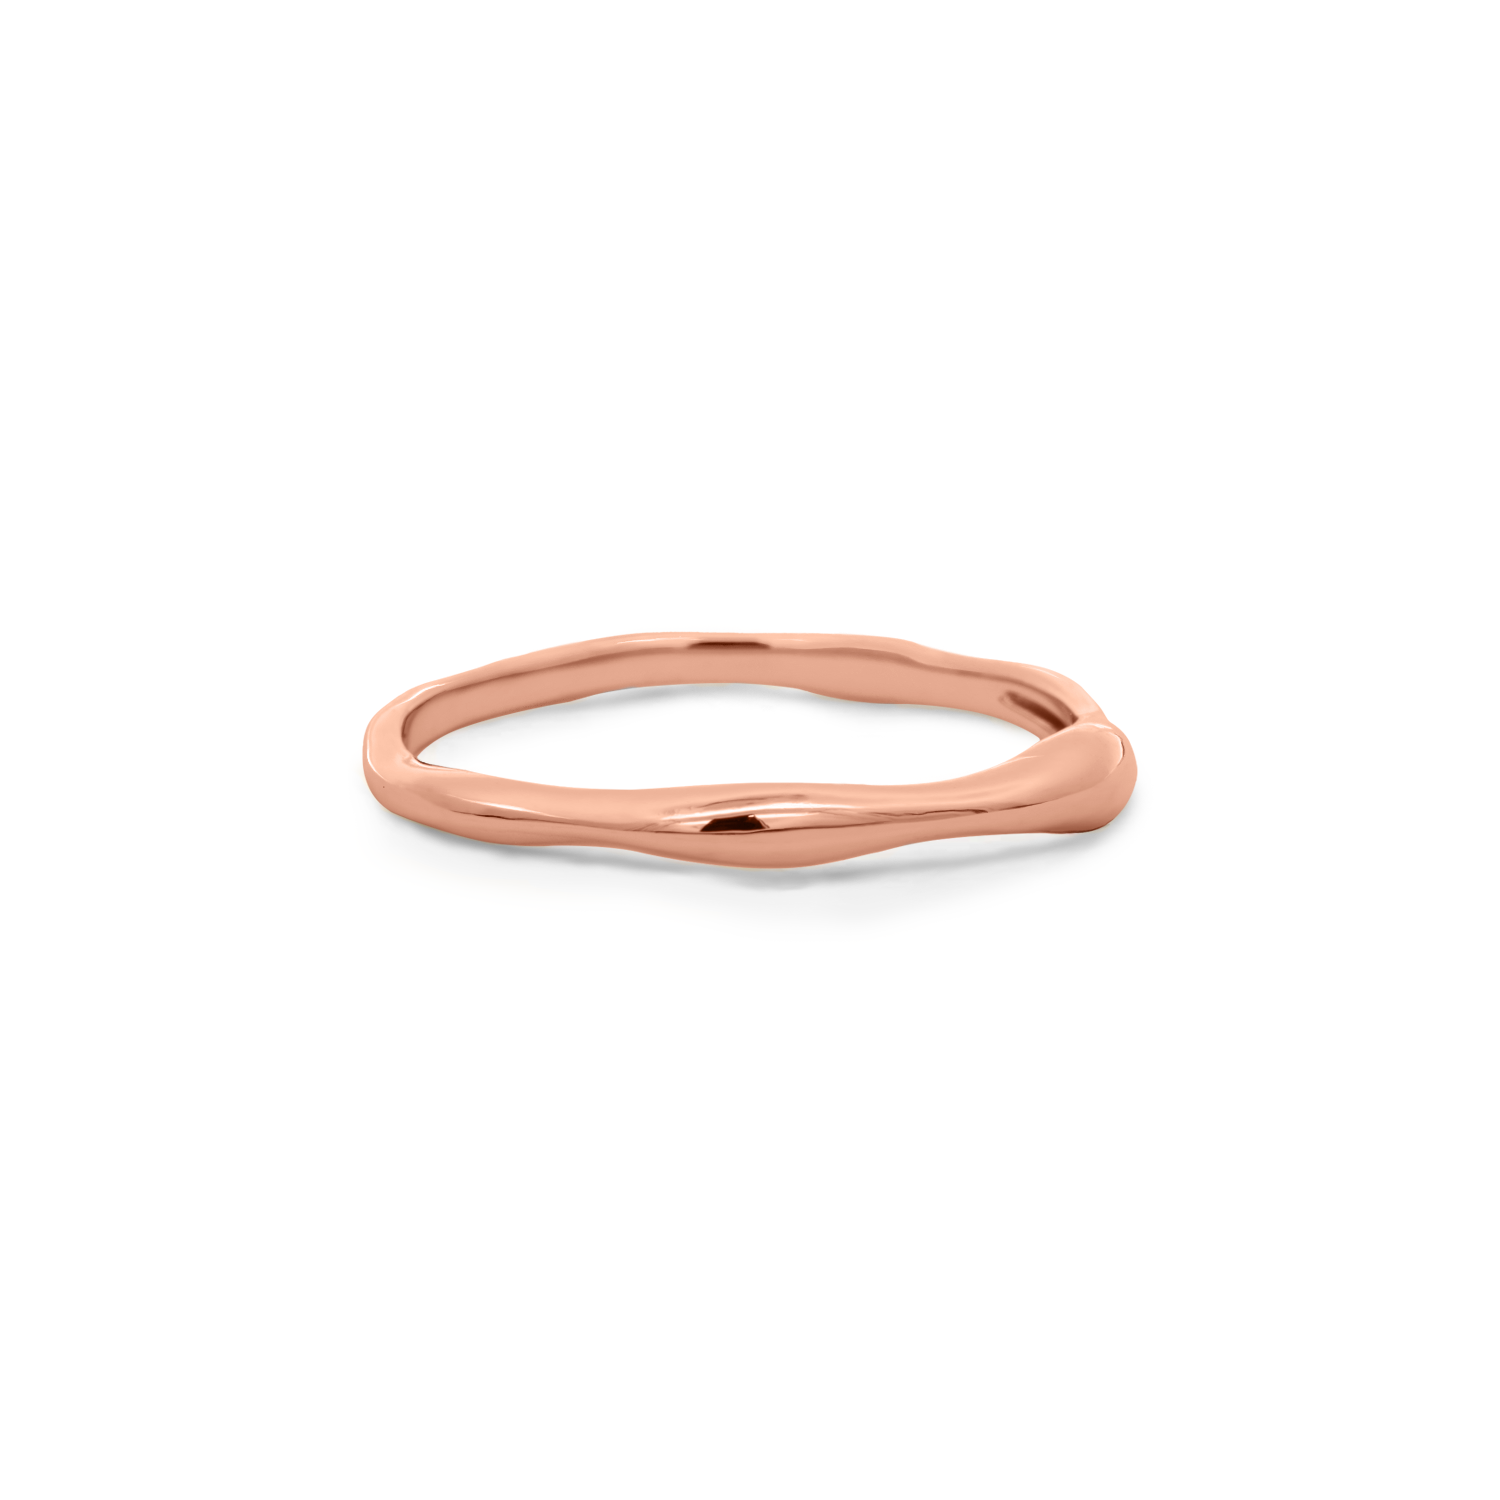 Rose gold elegant and minimalist ring.